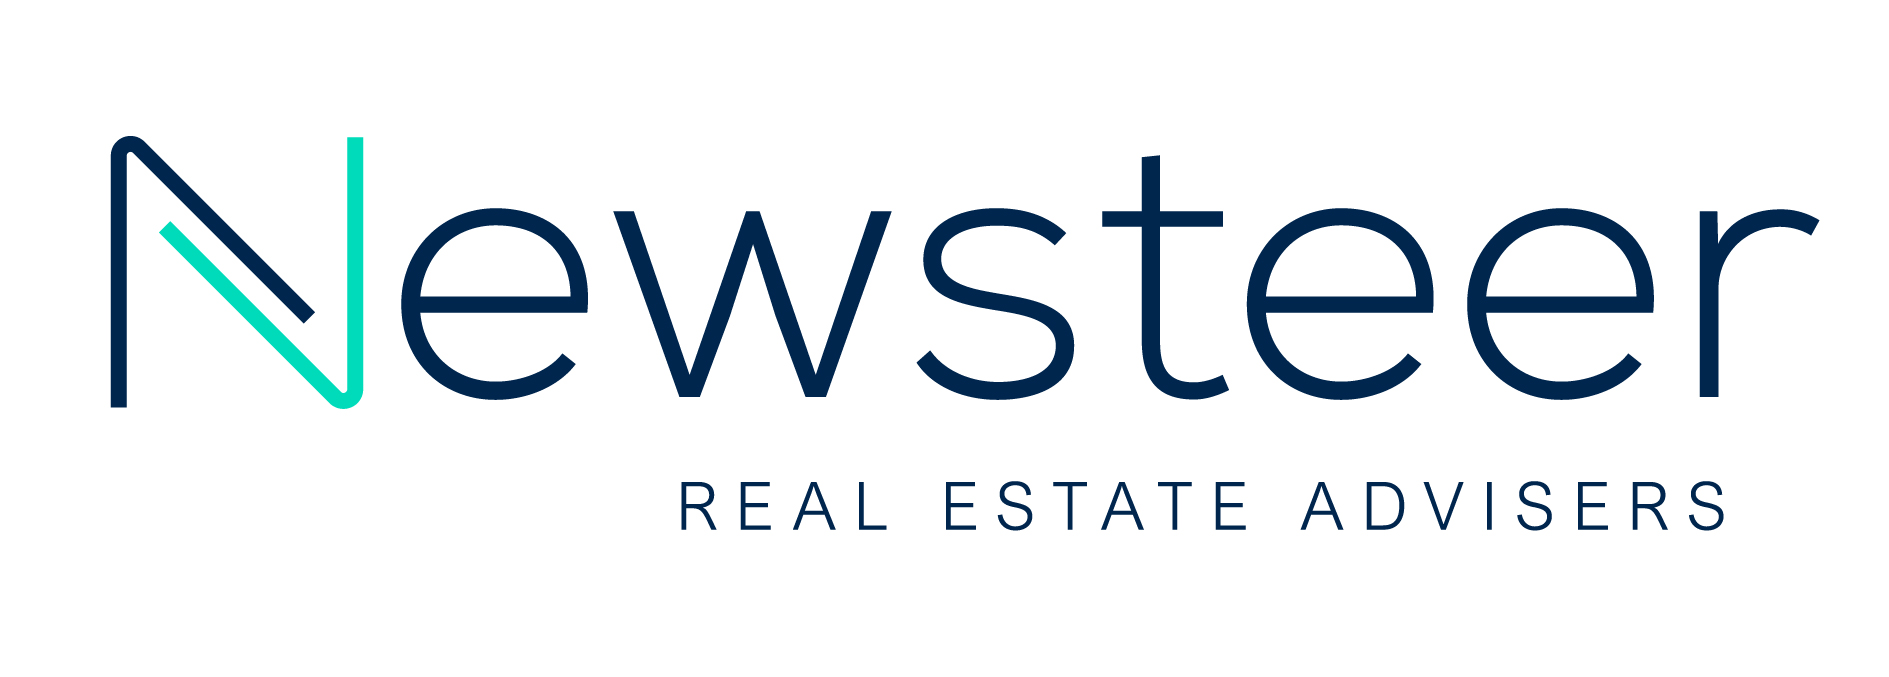 New Steer Real Estates Advisers 